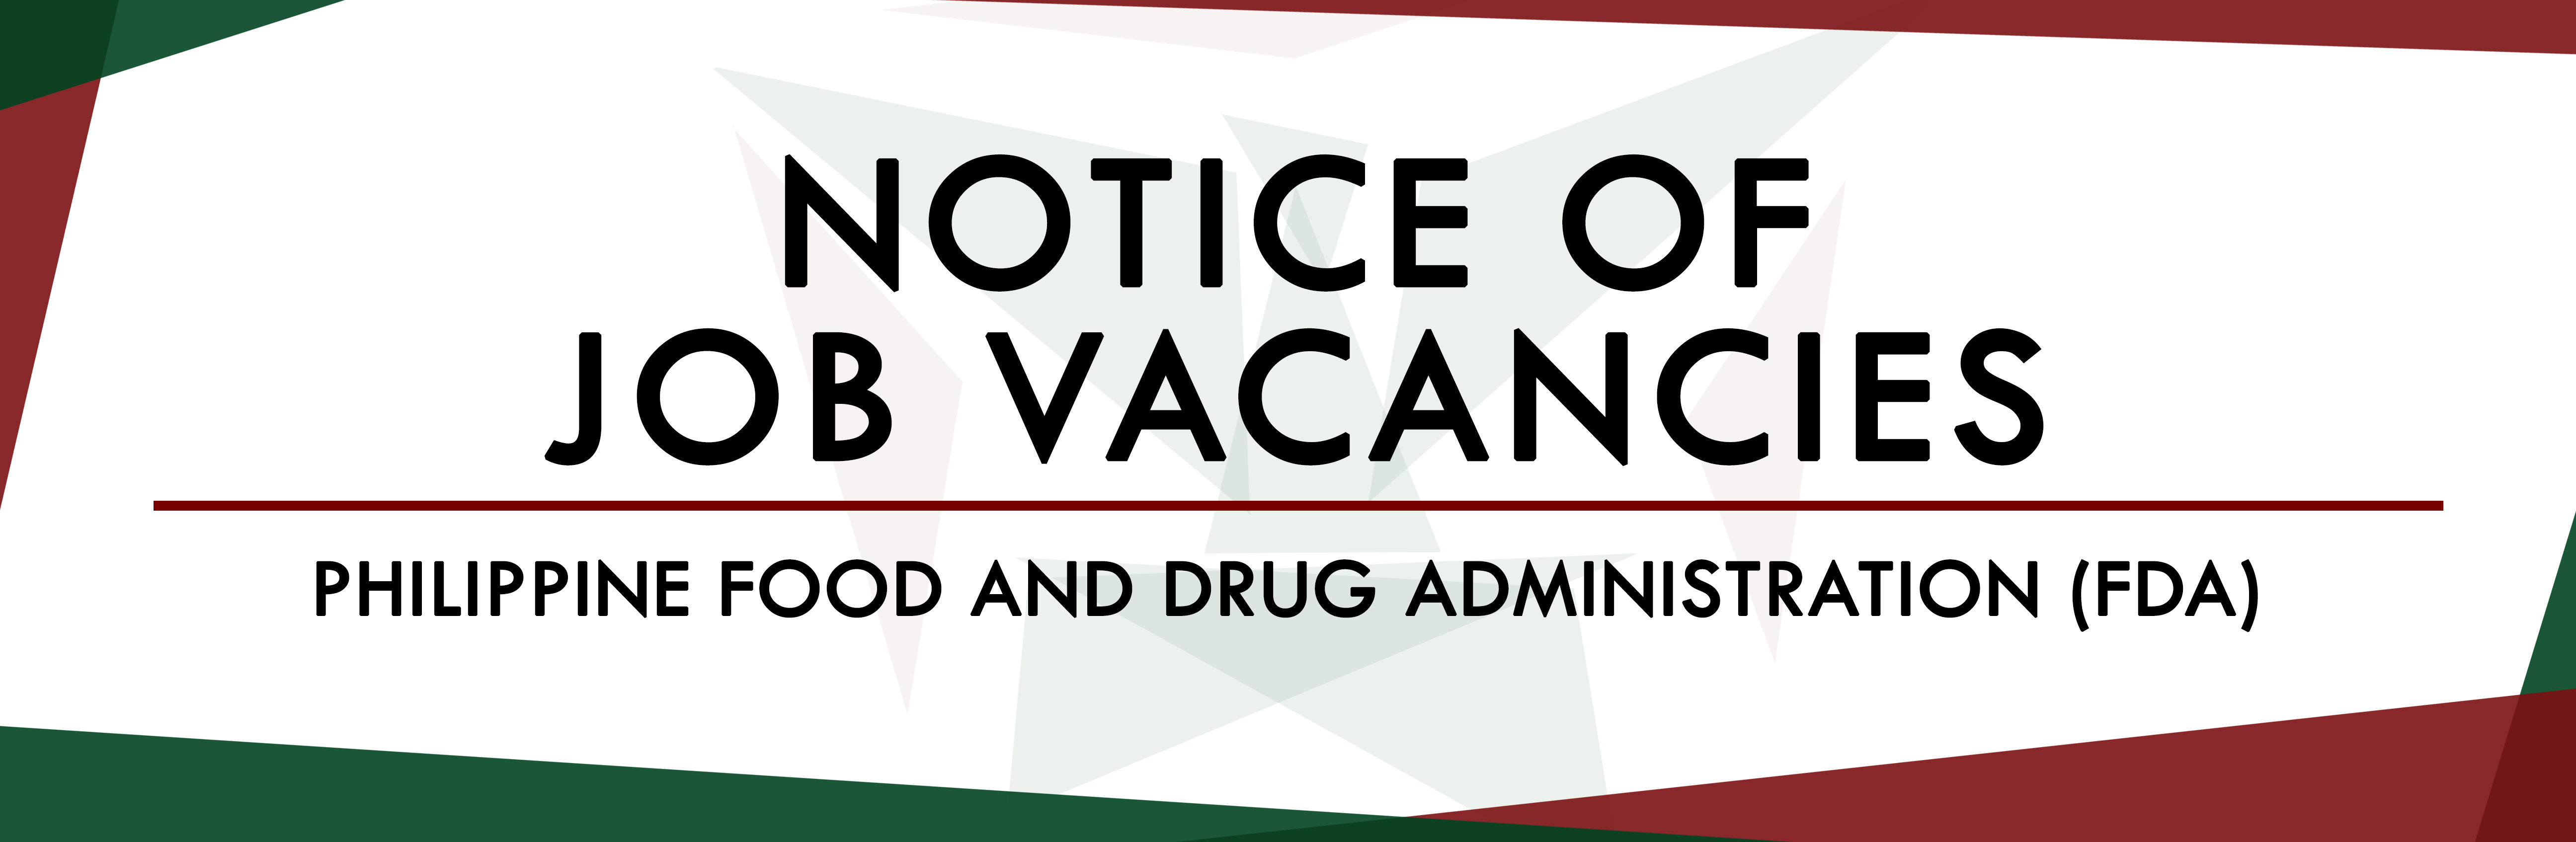 Notice Of Job Vacancies For Pharmacists In Philippine FDA